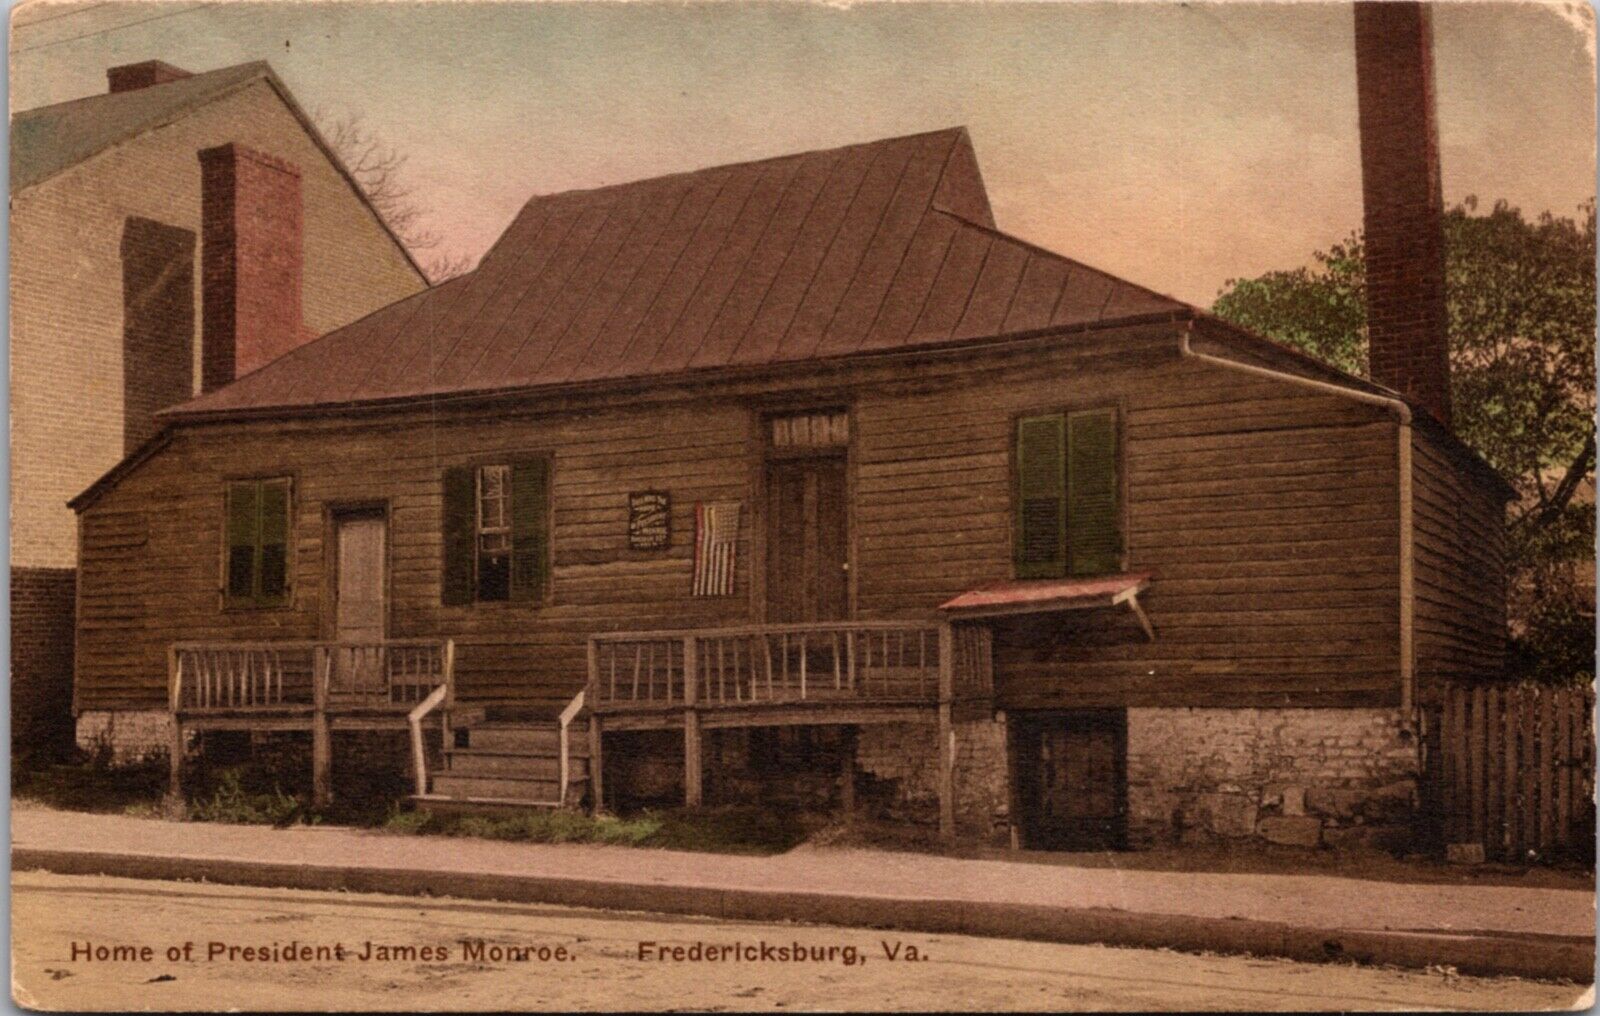 Hand Colored Postcard Home of President James Monroe in Fredericksburg, Virginia